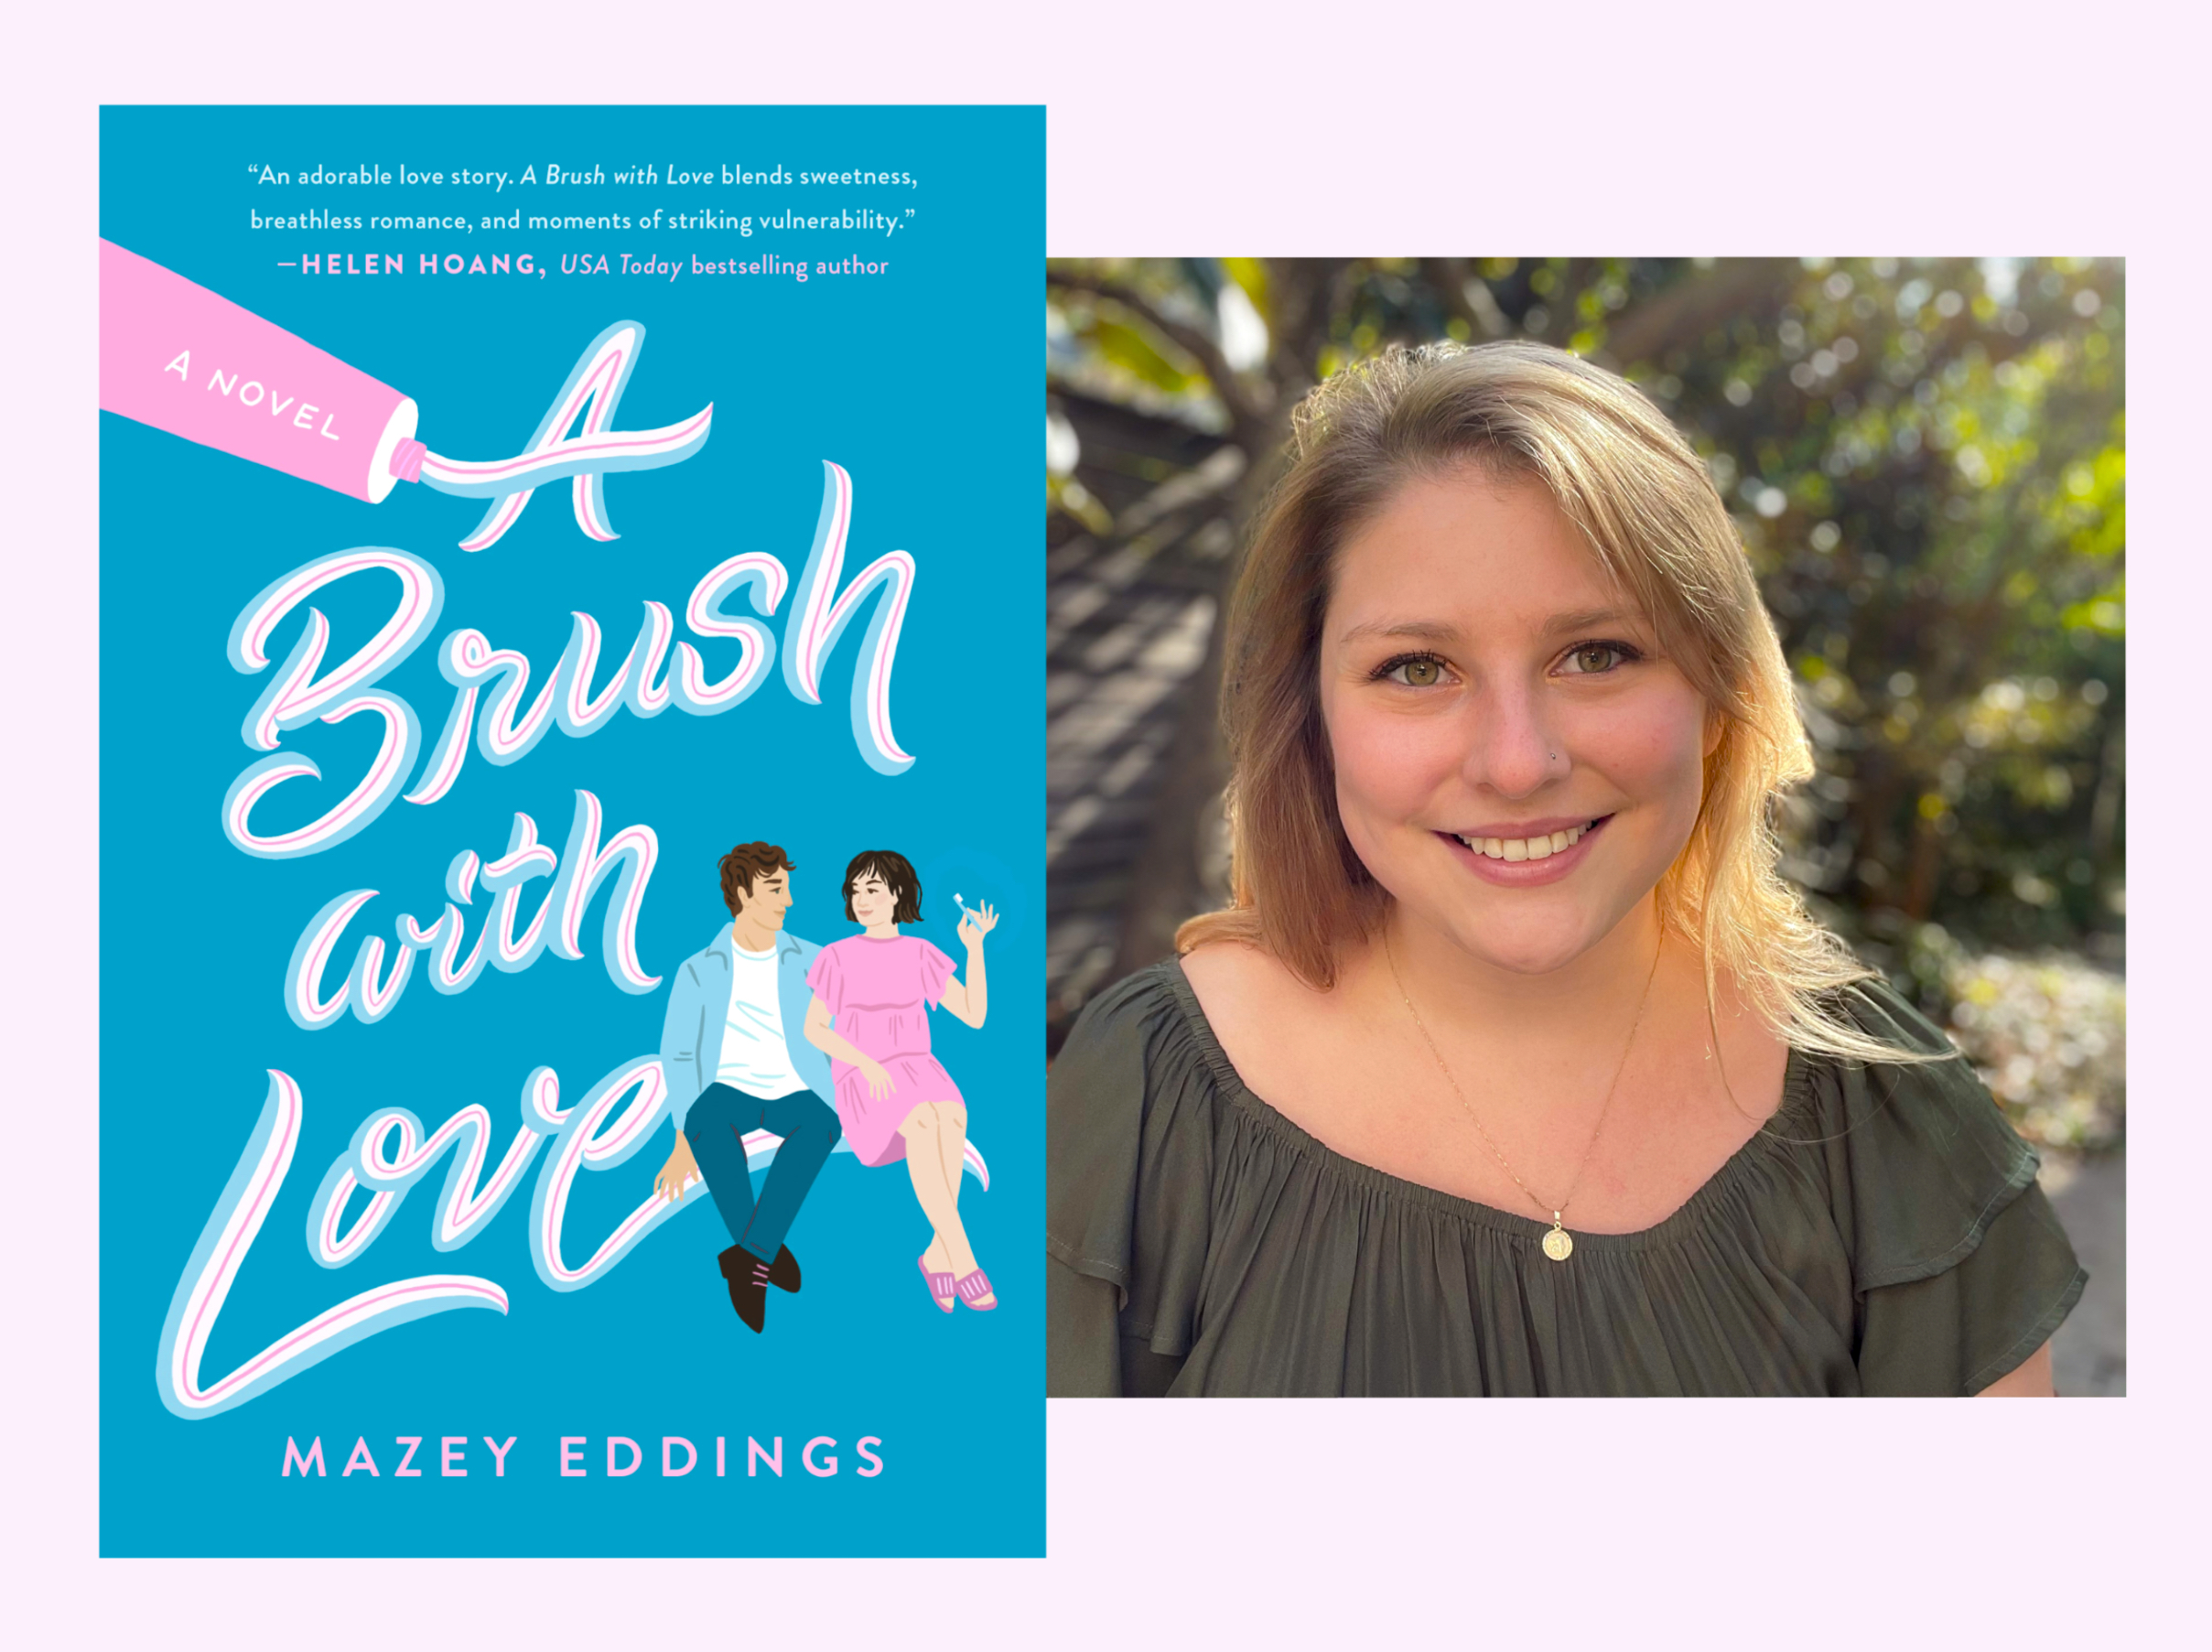 Mazey Eddings Writes Love Stories for Every Brain